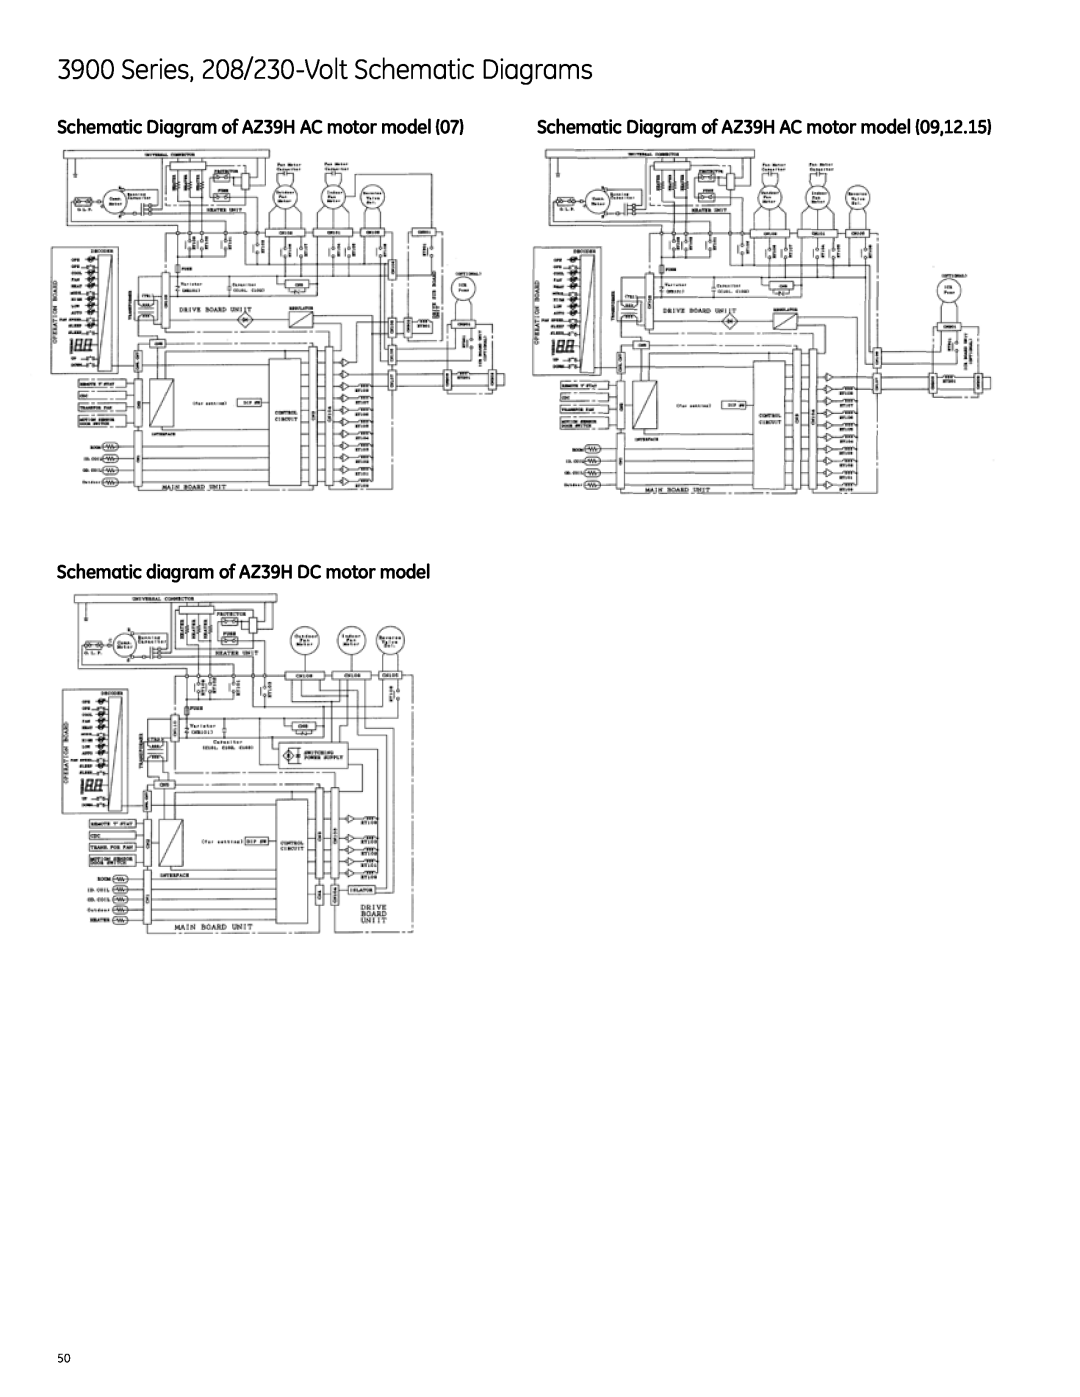 GE Monogram 2900 Series, 3900 Series Series, 208/230-VoltSchematic Diagrams, Schematic Diagram of AZ39H AC motor model 